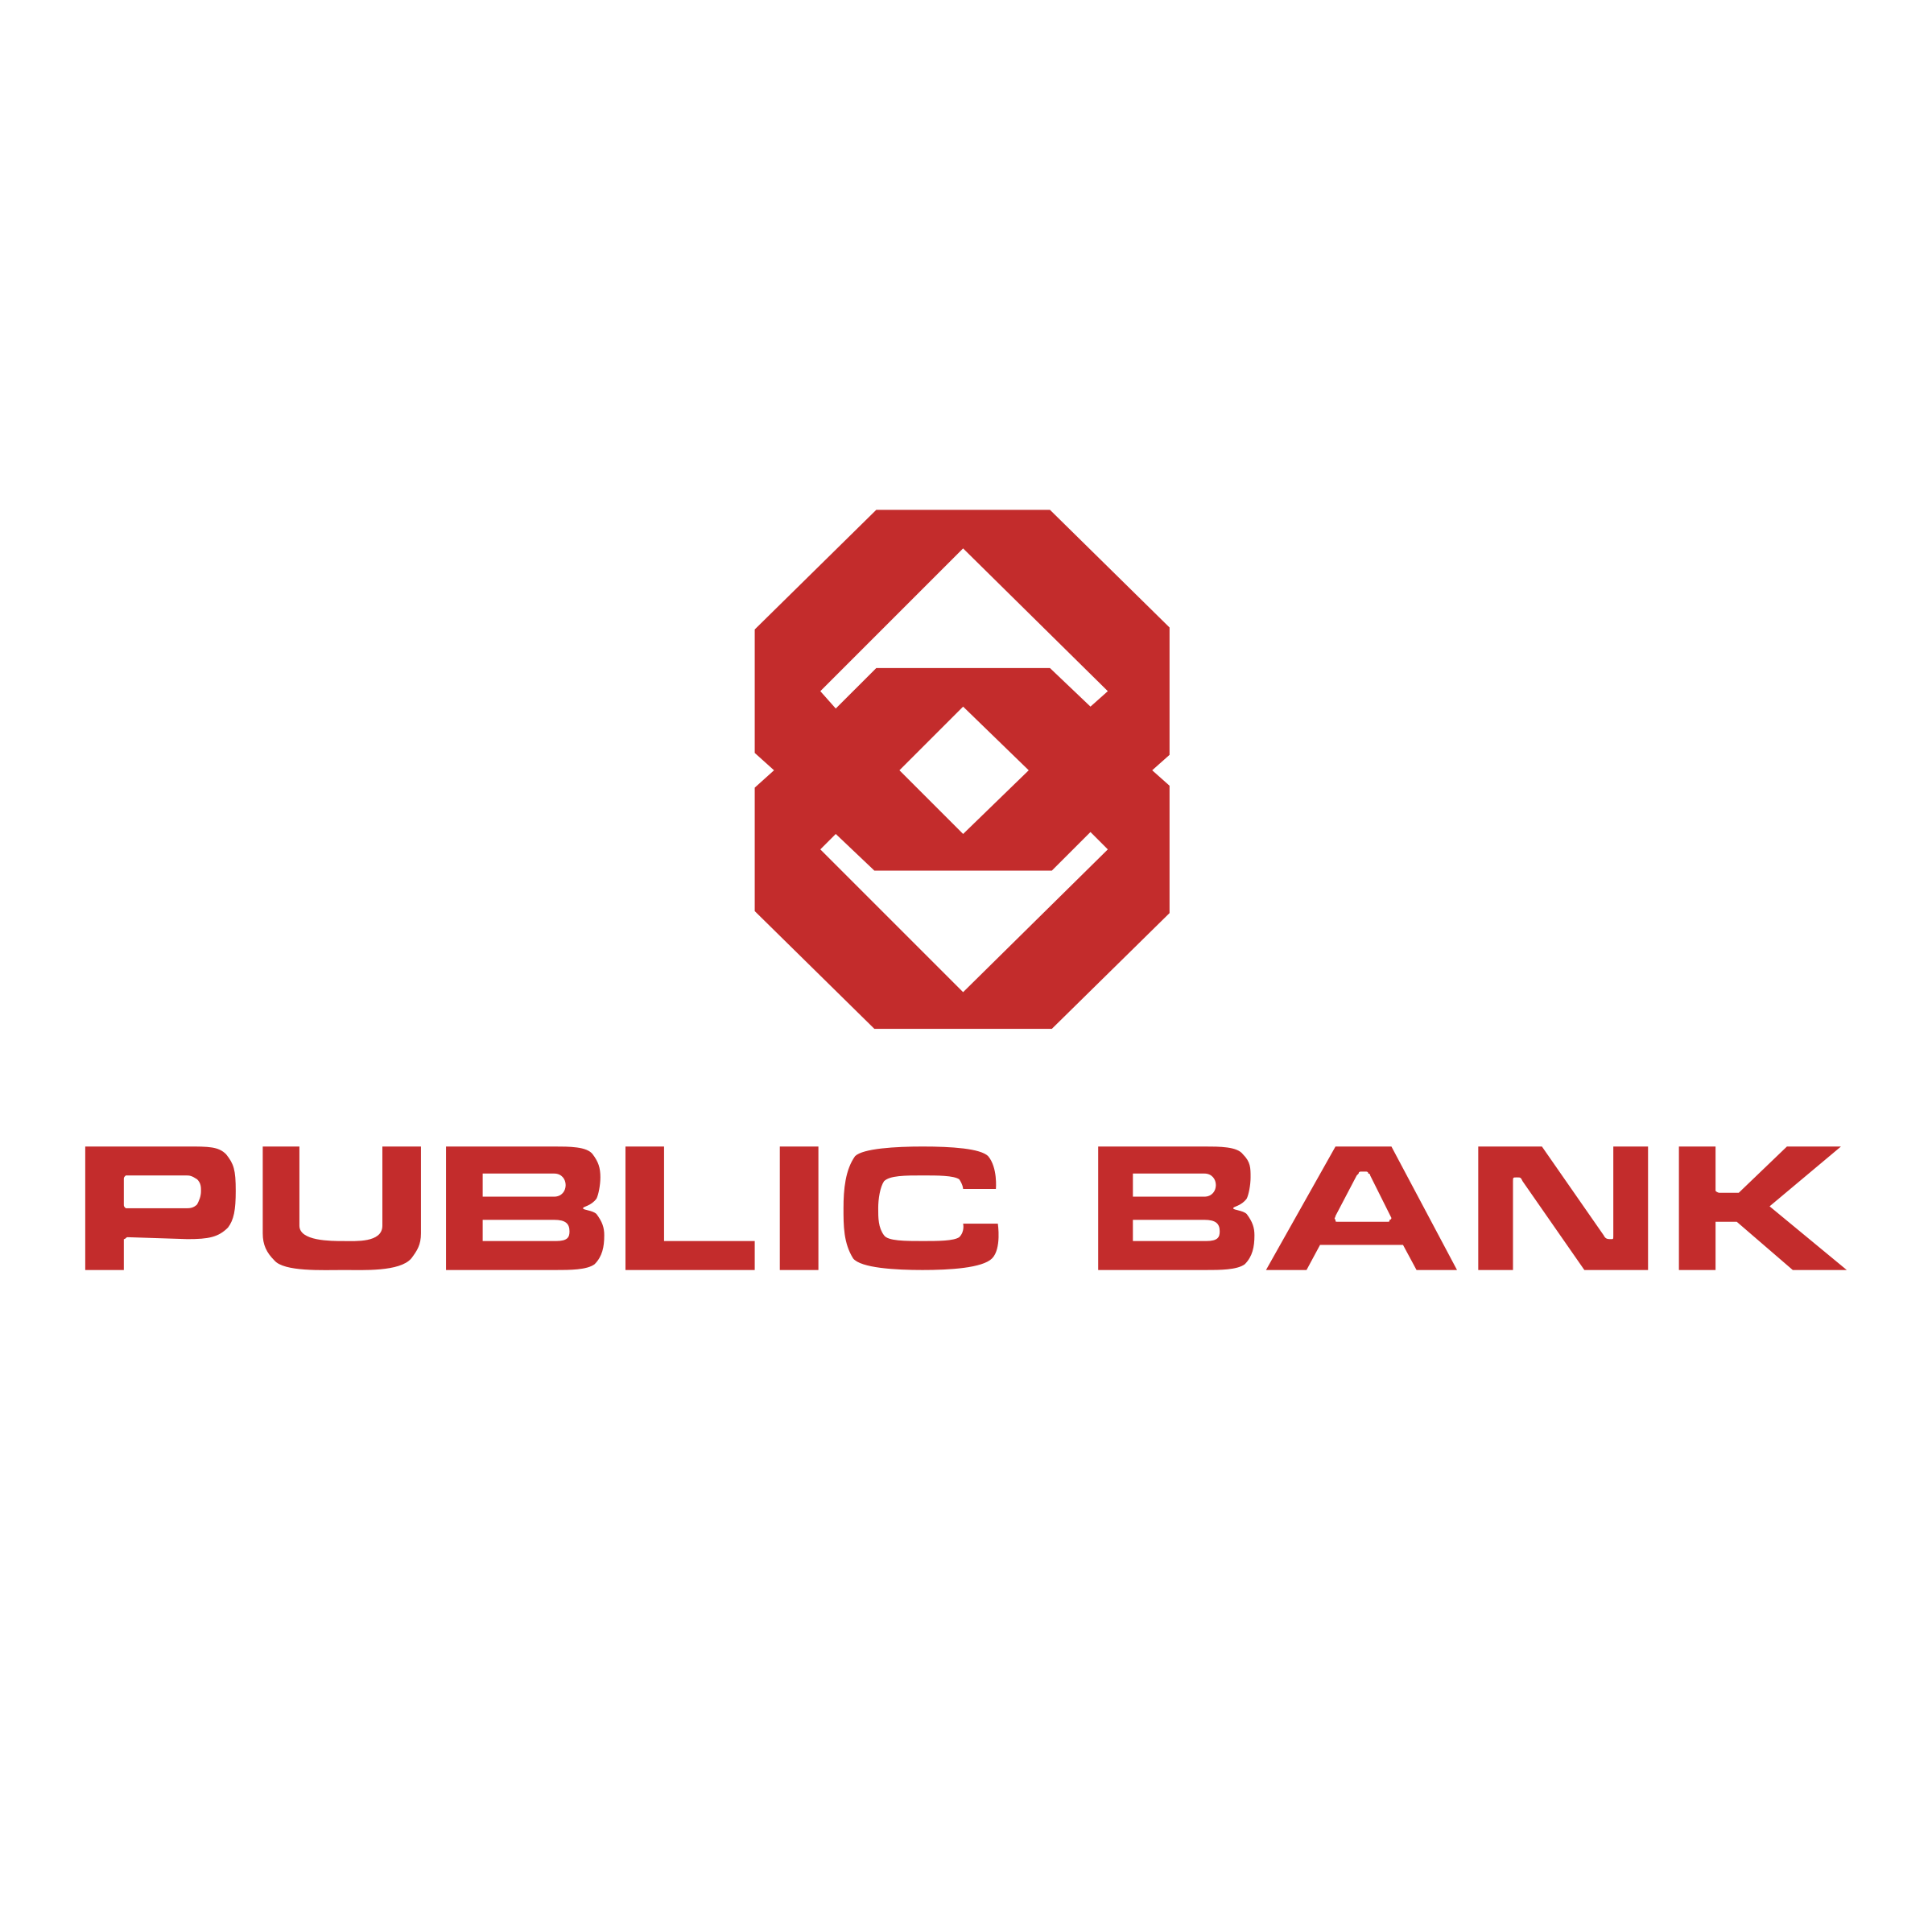 How to apply public bank moratorium